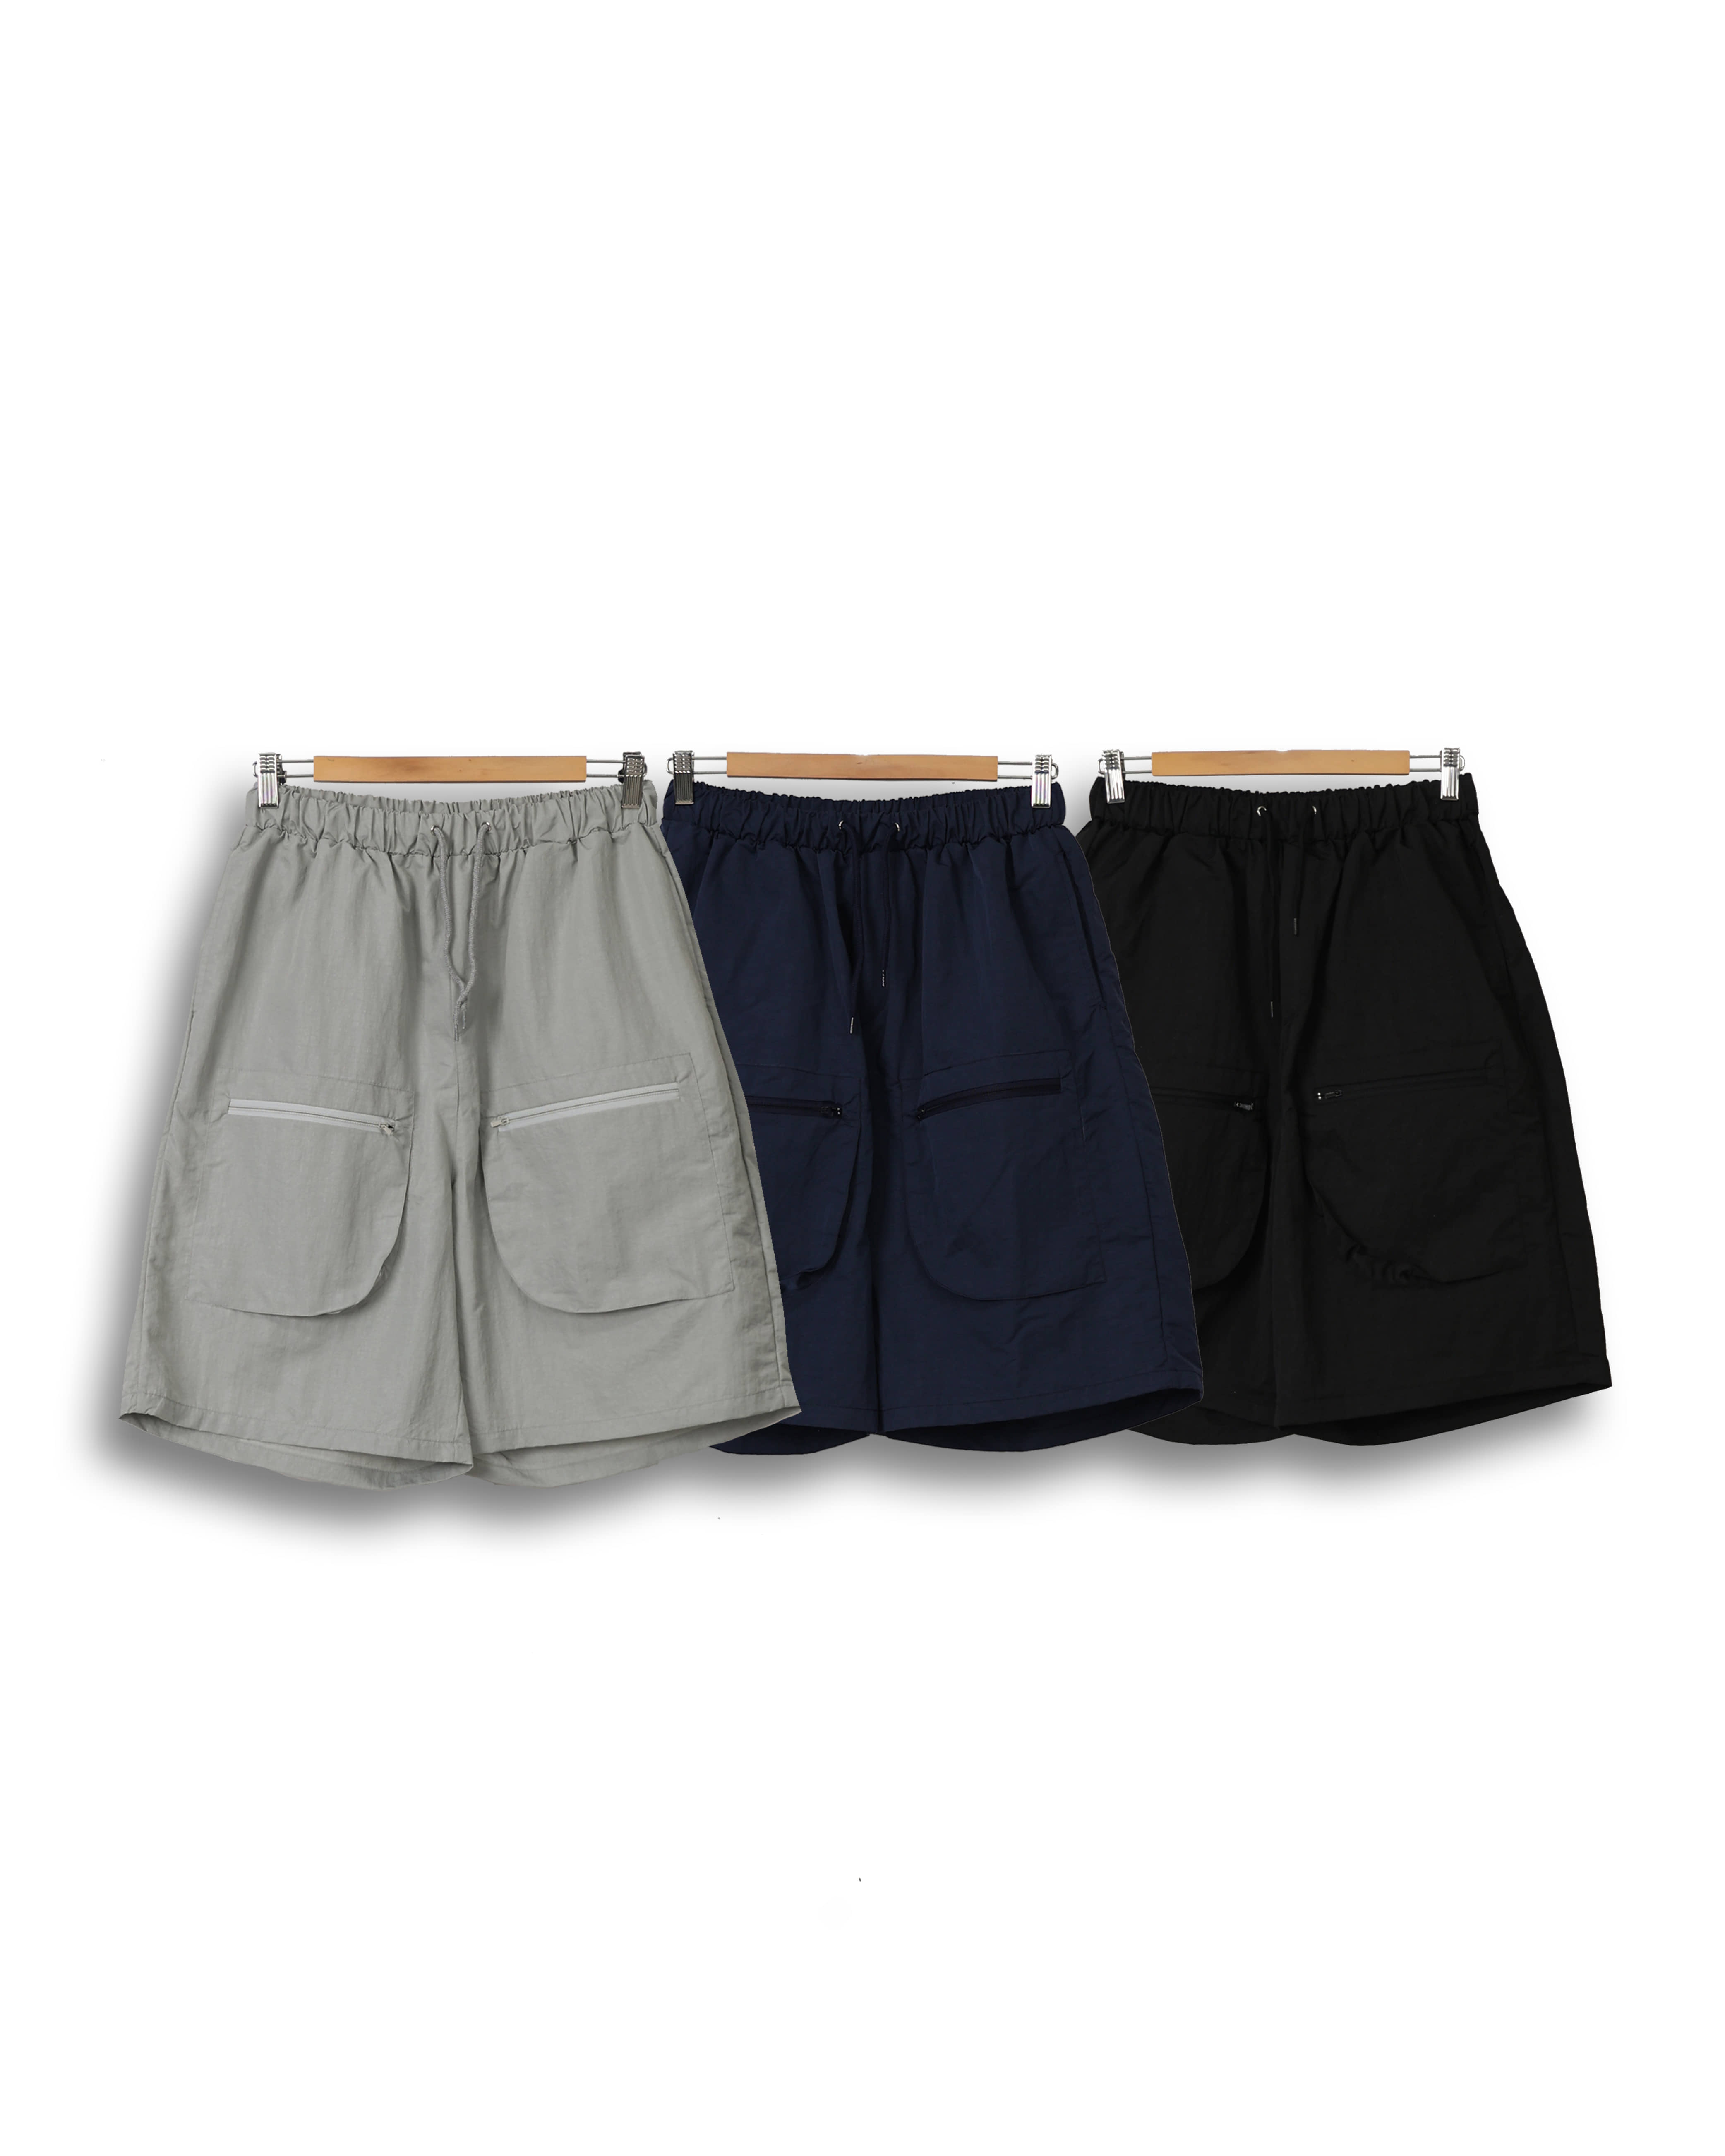 RON ZIP Pocket Nylon Bermuda Pants (Black/Navy/Gray)